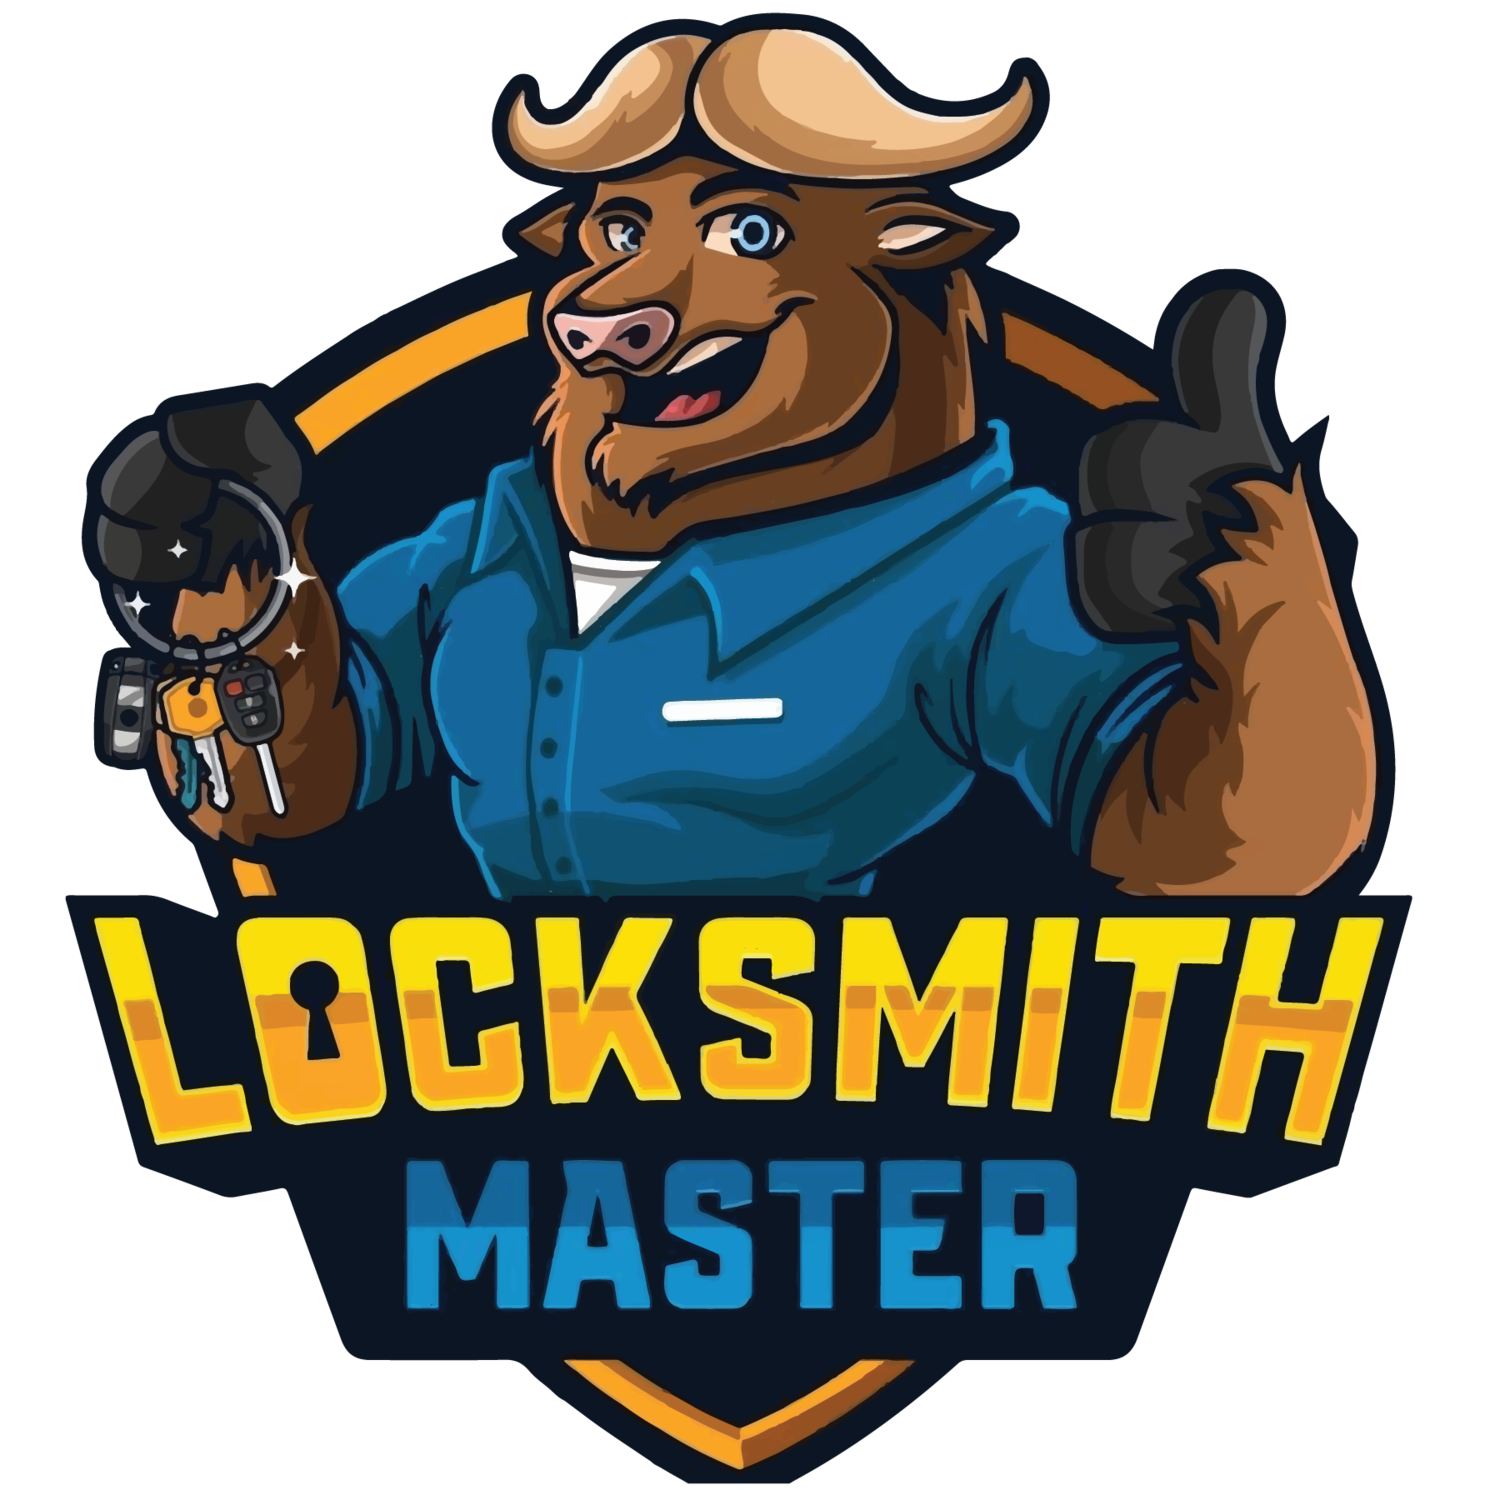 Locksmith Master